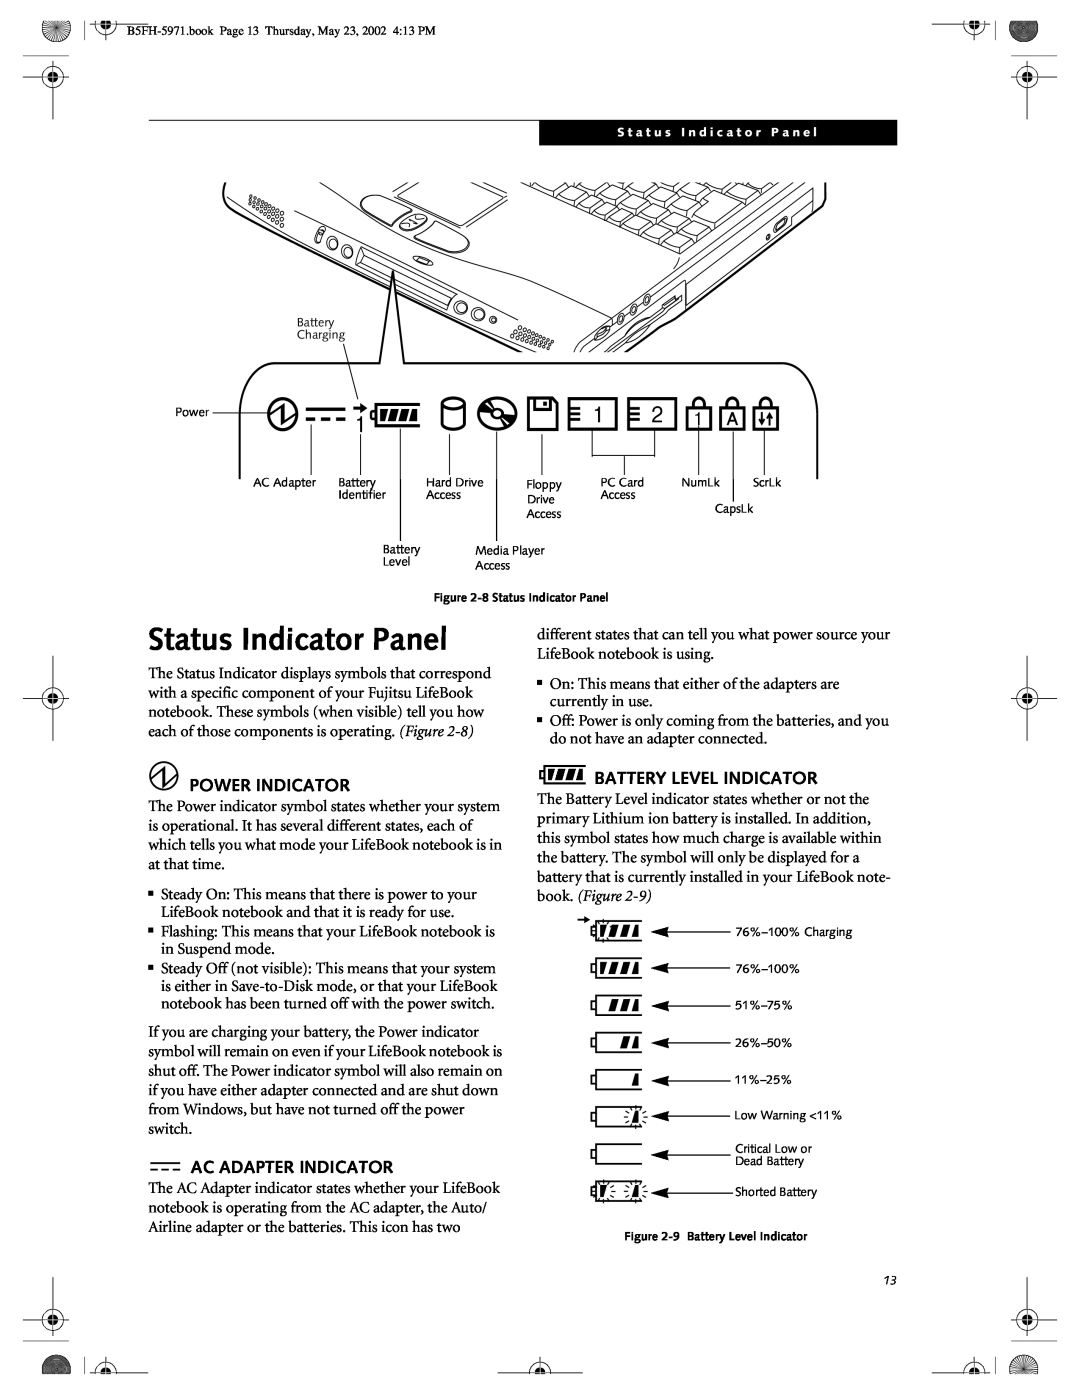 Fujitsu C2010, C2111 manual Status Indicator Panel, Power Indicator, Ac Adapter Indicator, Battery Level Indicator 